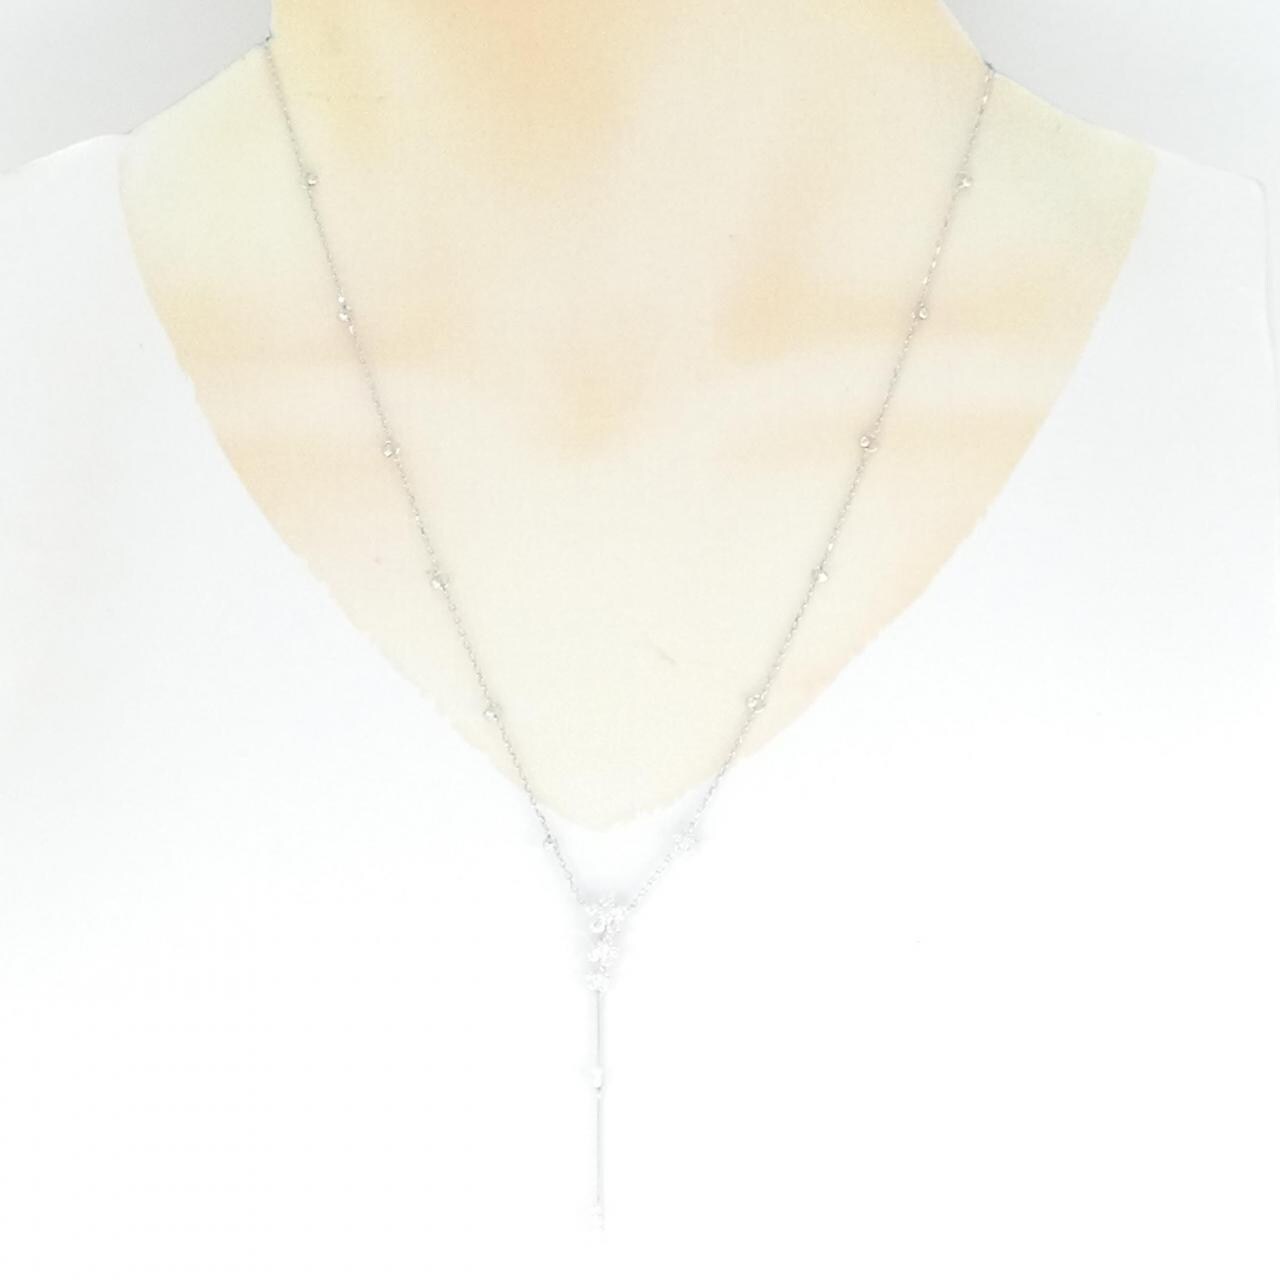 K18WG flower Diamond necklace 0.56CT